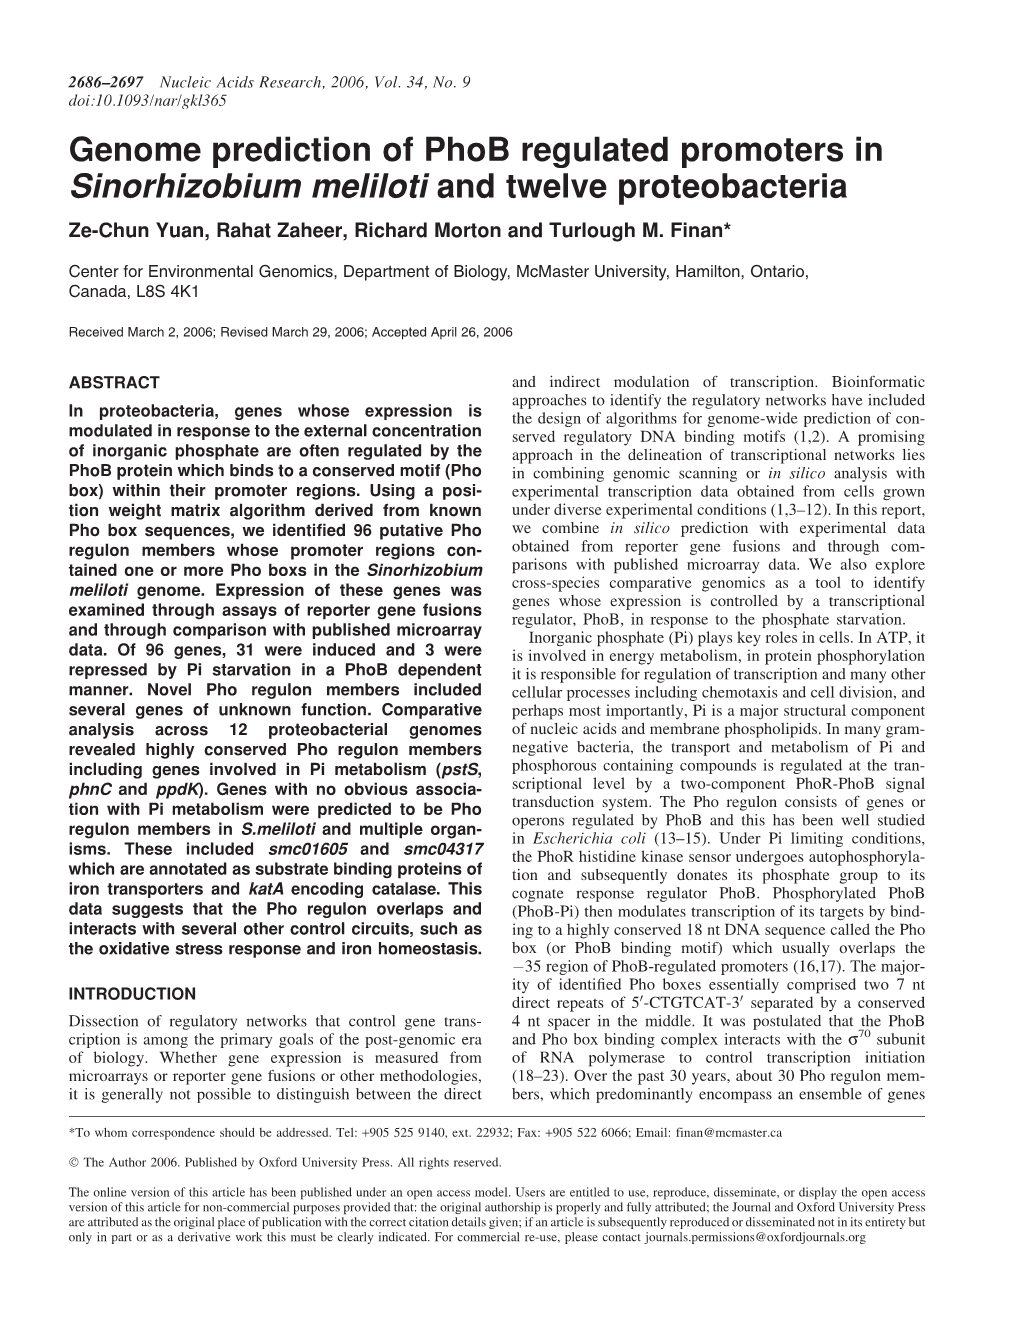 Genome Prediction of Phob Regulated Promoters in Sinorhizobium Meliloti and Twelve Proteobacteria Ze-Chun Yuan, Rahat Zaheer, Richard Morton and Turlough M